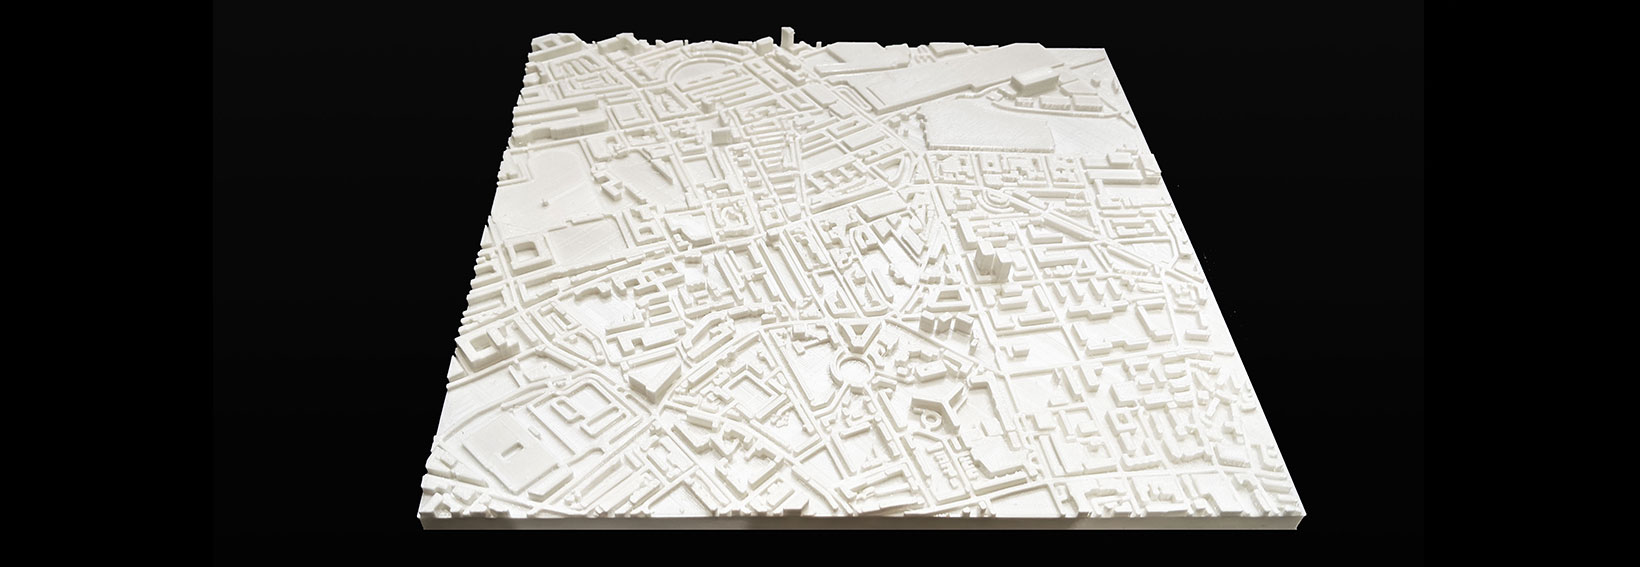 3D Model Banner, architectural physical model, cityscape, london, uk